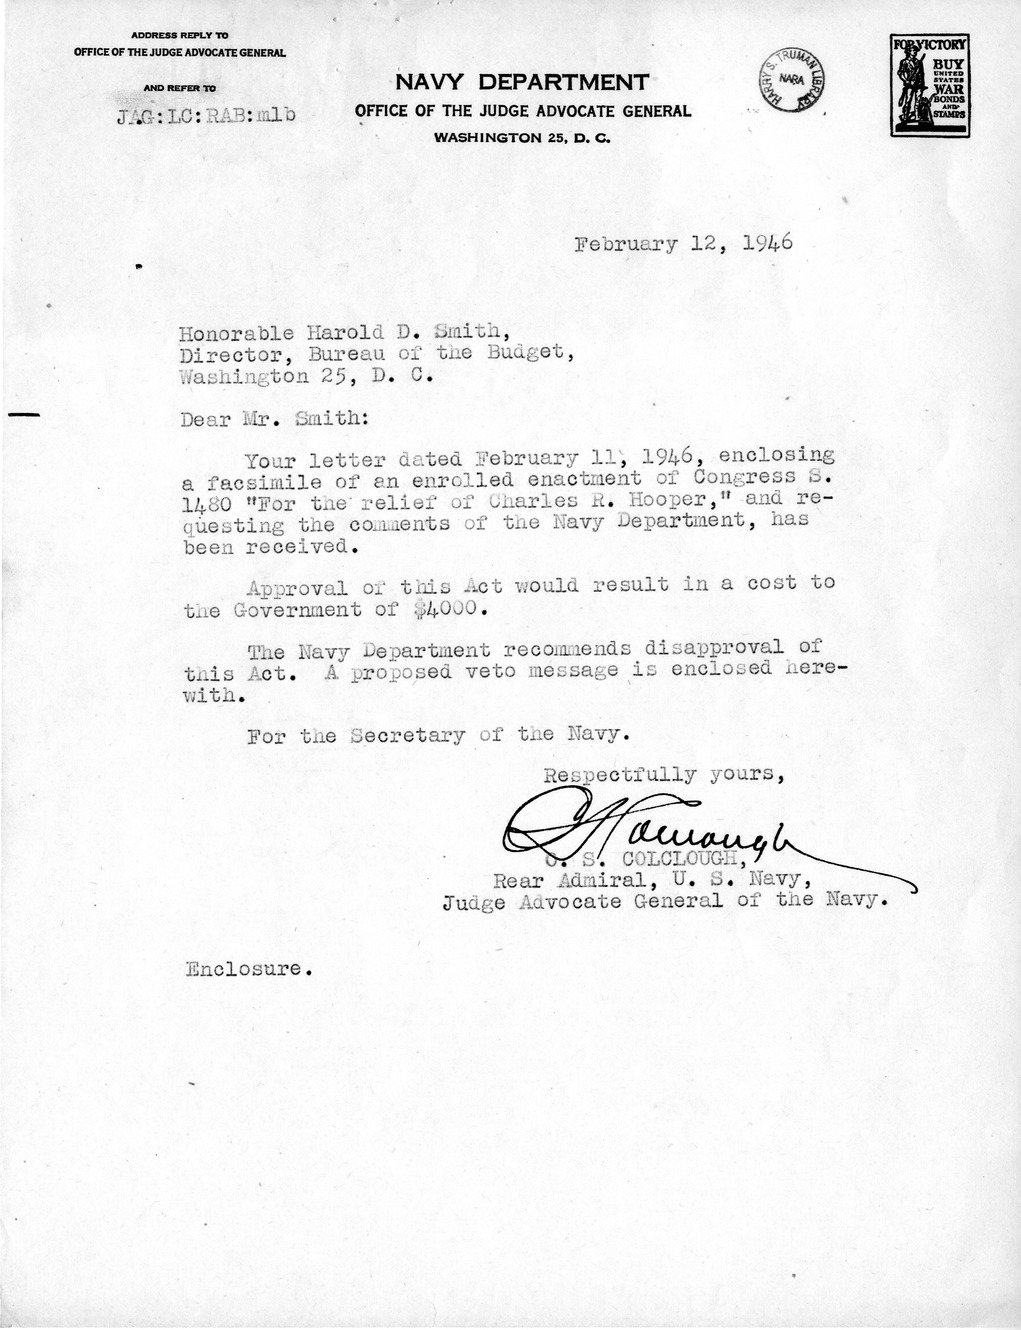 Memorandum from O. S. Colclough to Harold D. Smith